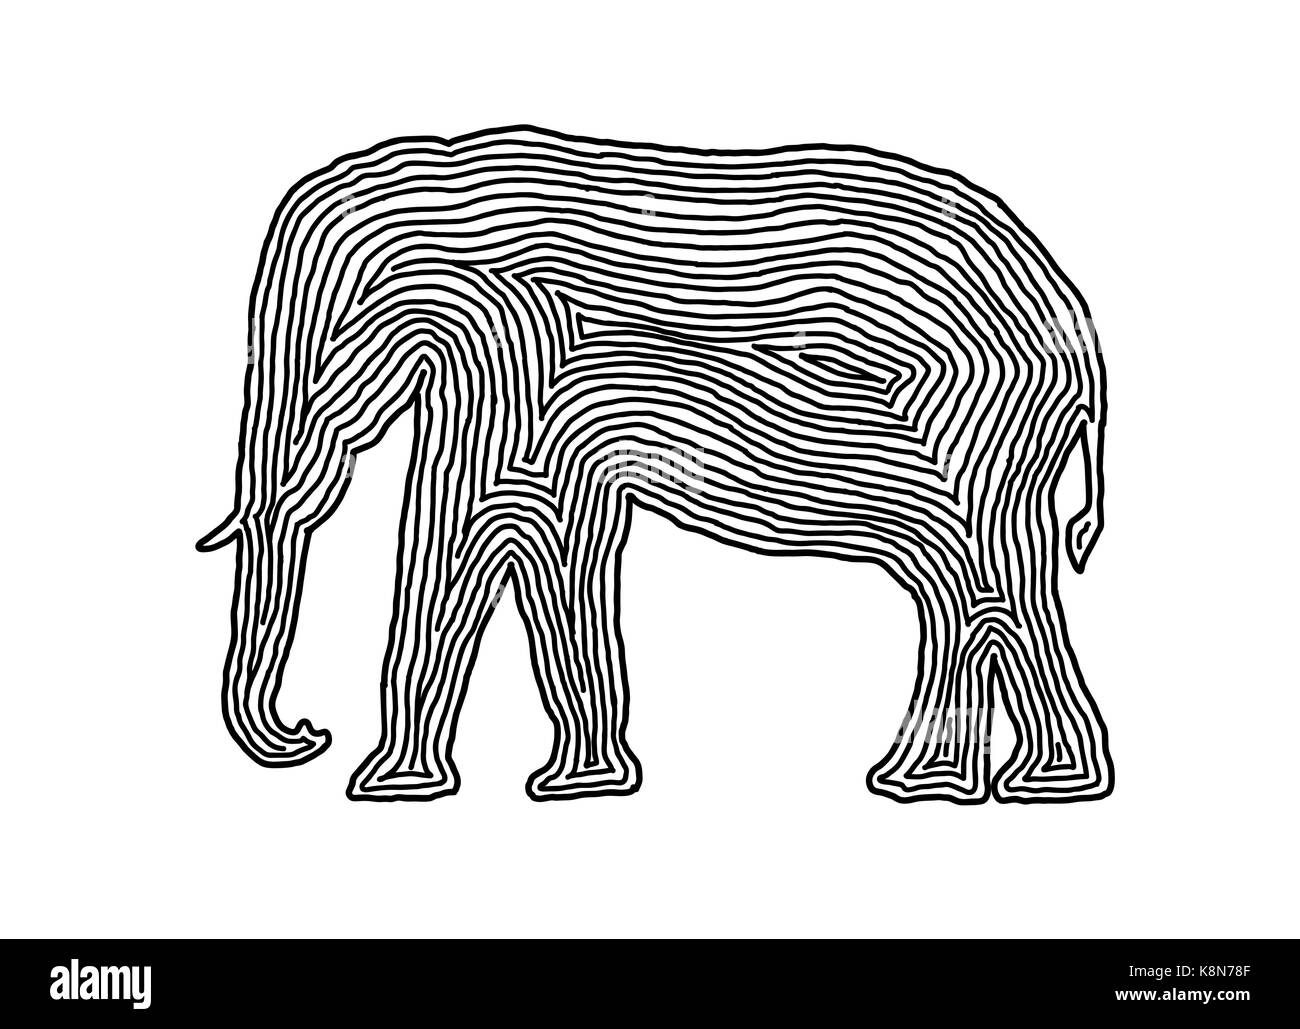 A elephant illustration icon in black offset line. Fingerprint style for logo or background design. Stock Vector